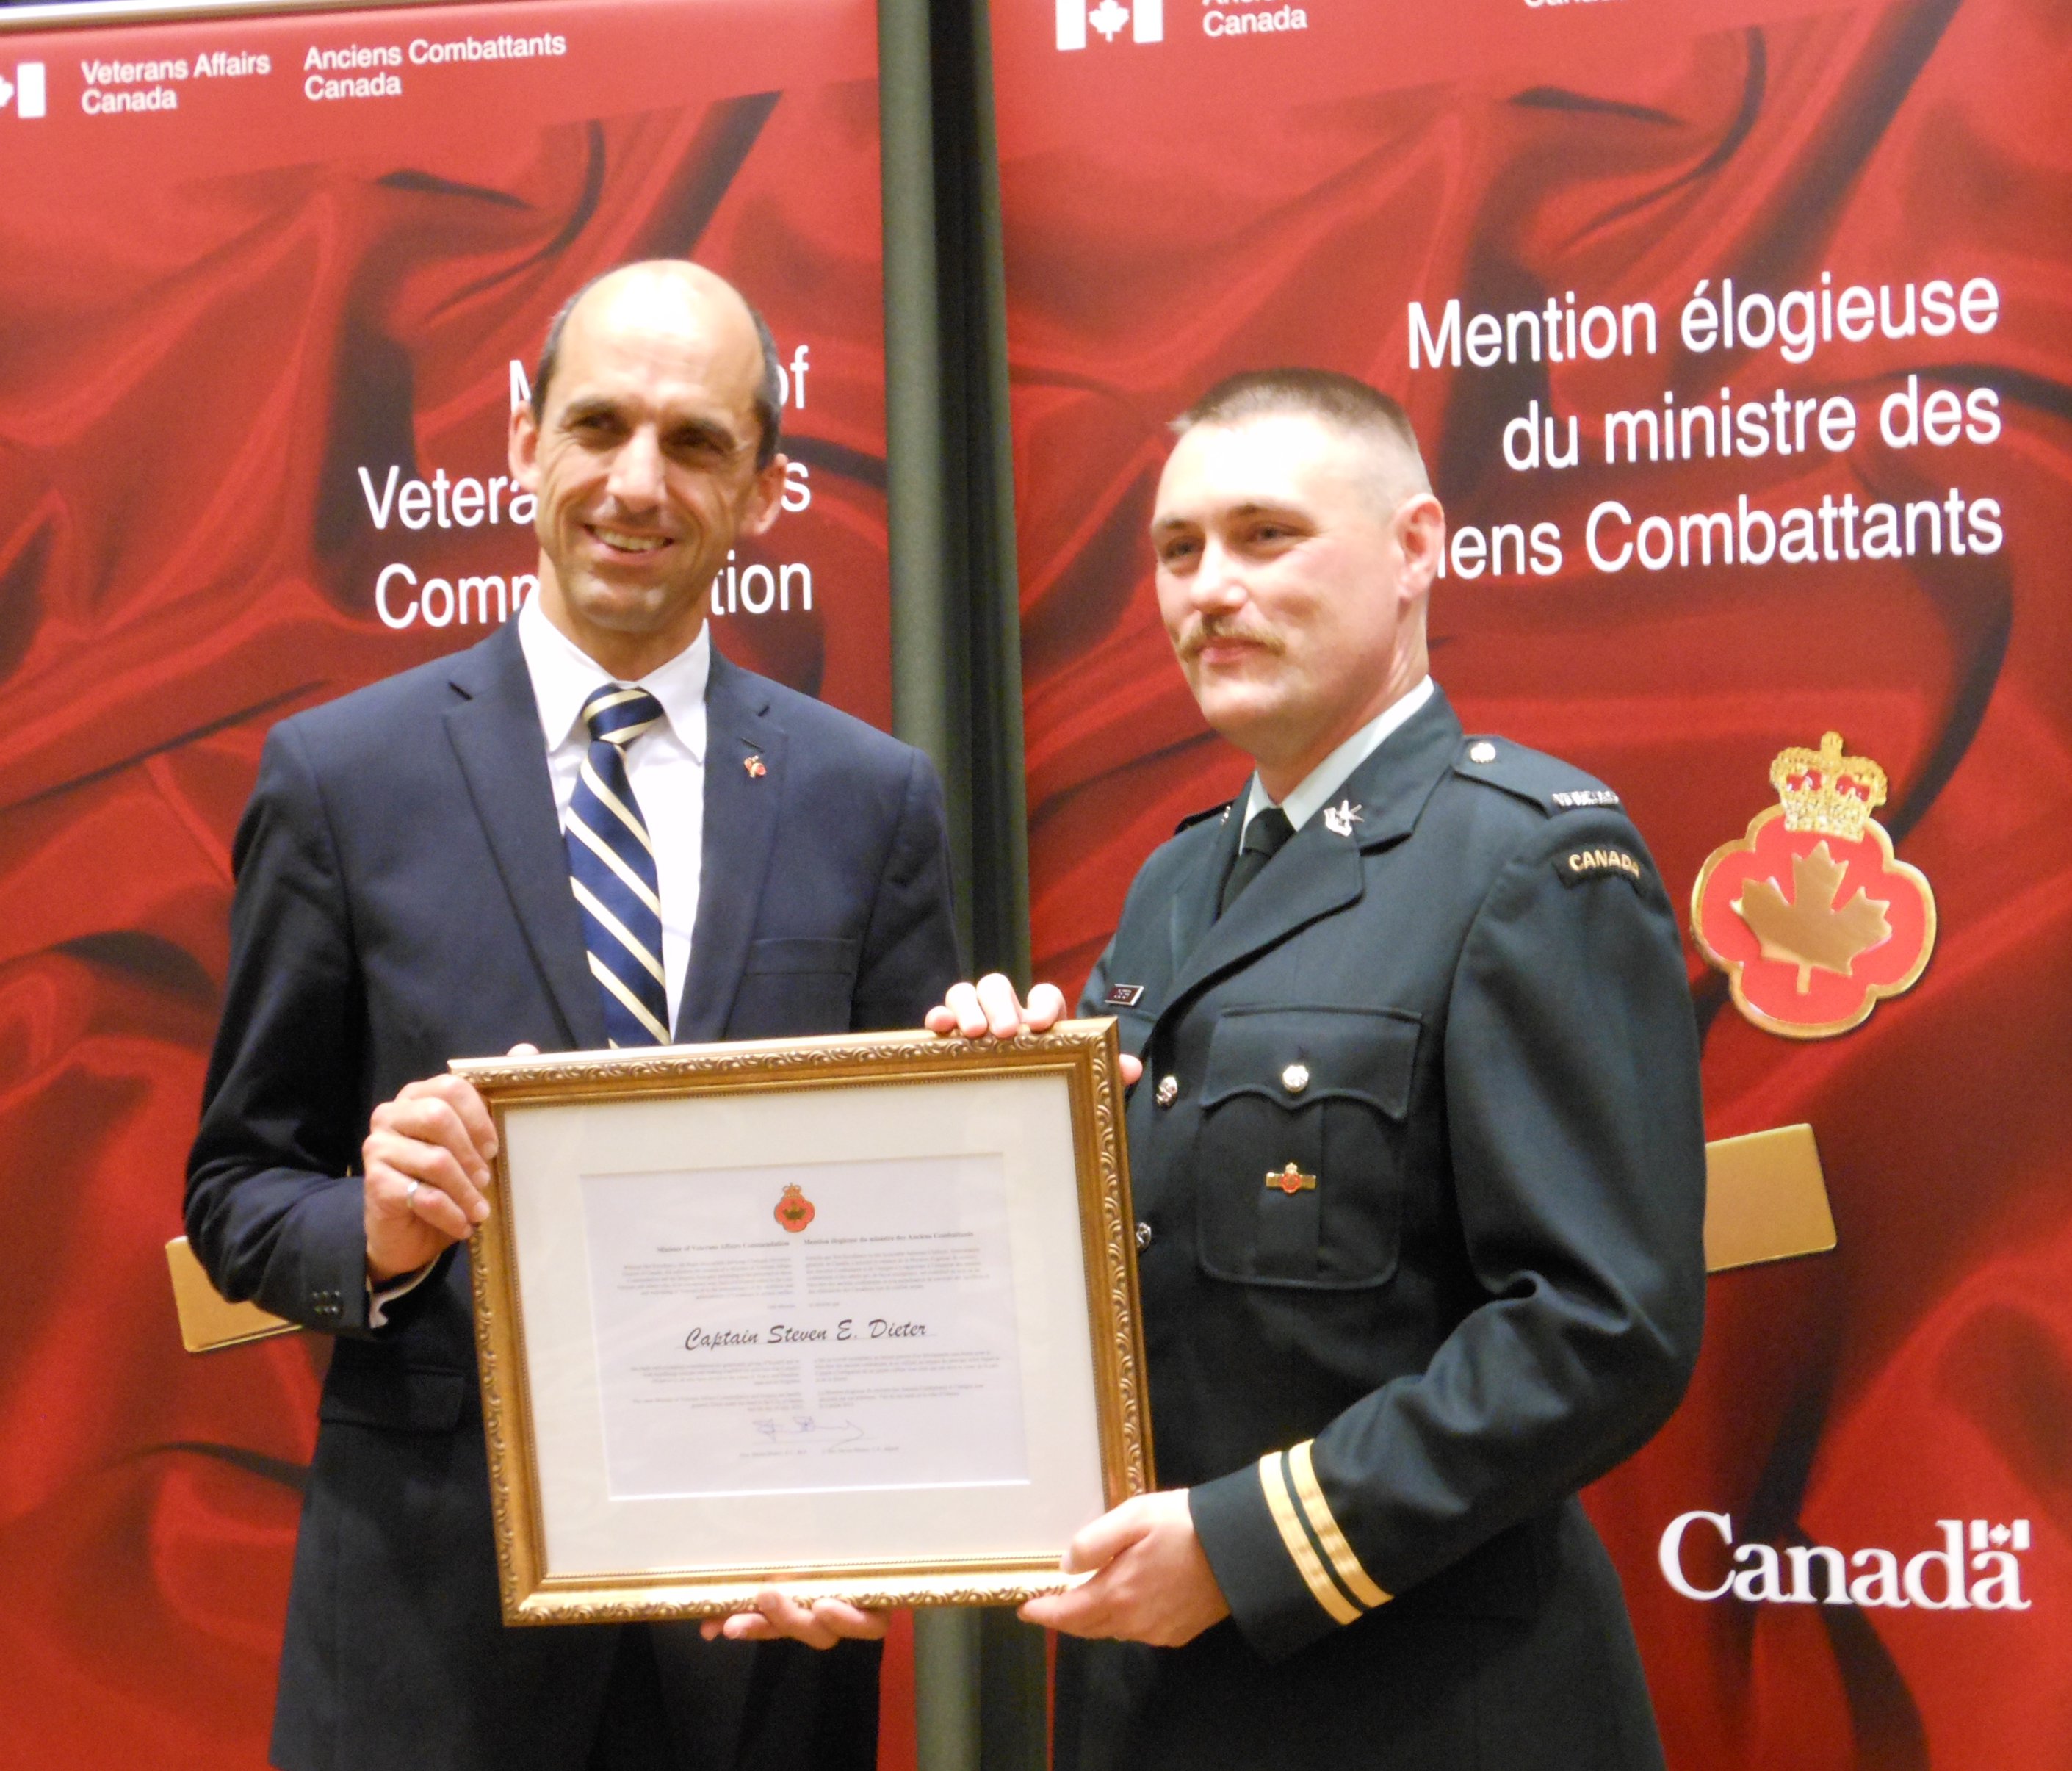 Minister of Veterans Affairs Commendation 2012